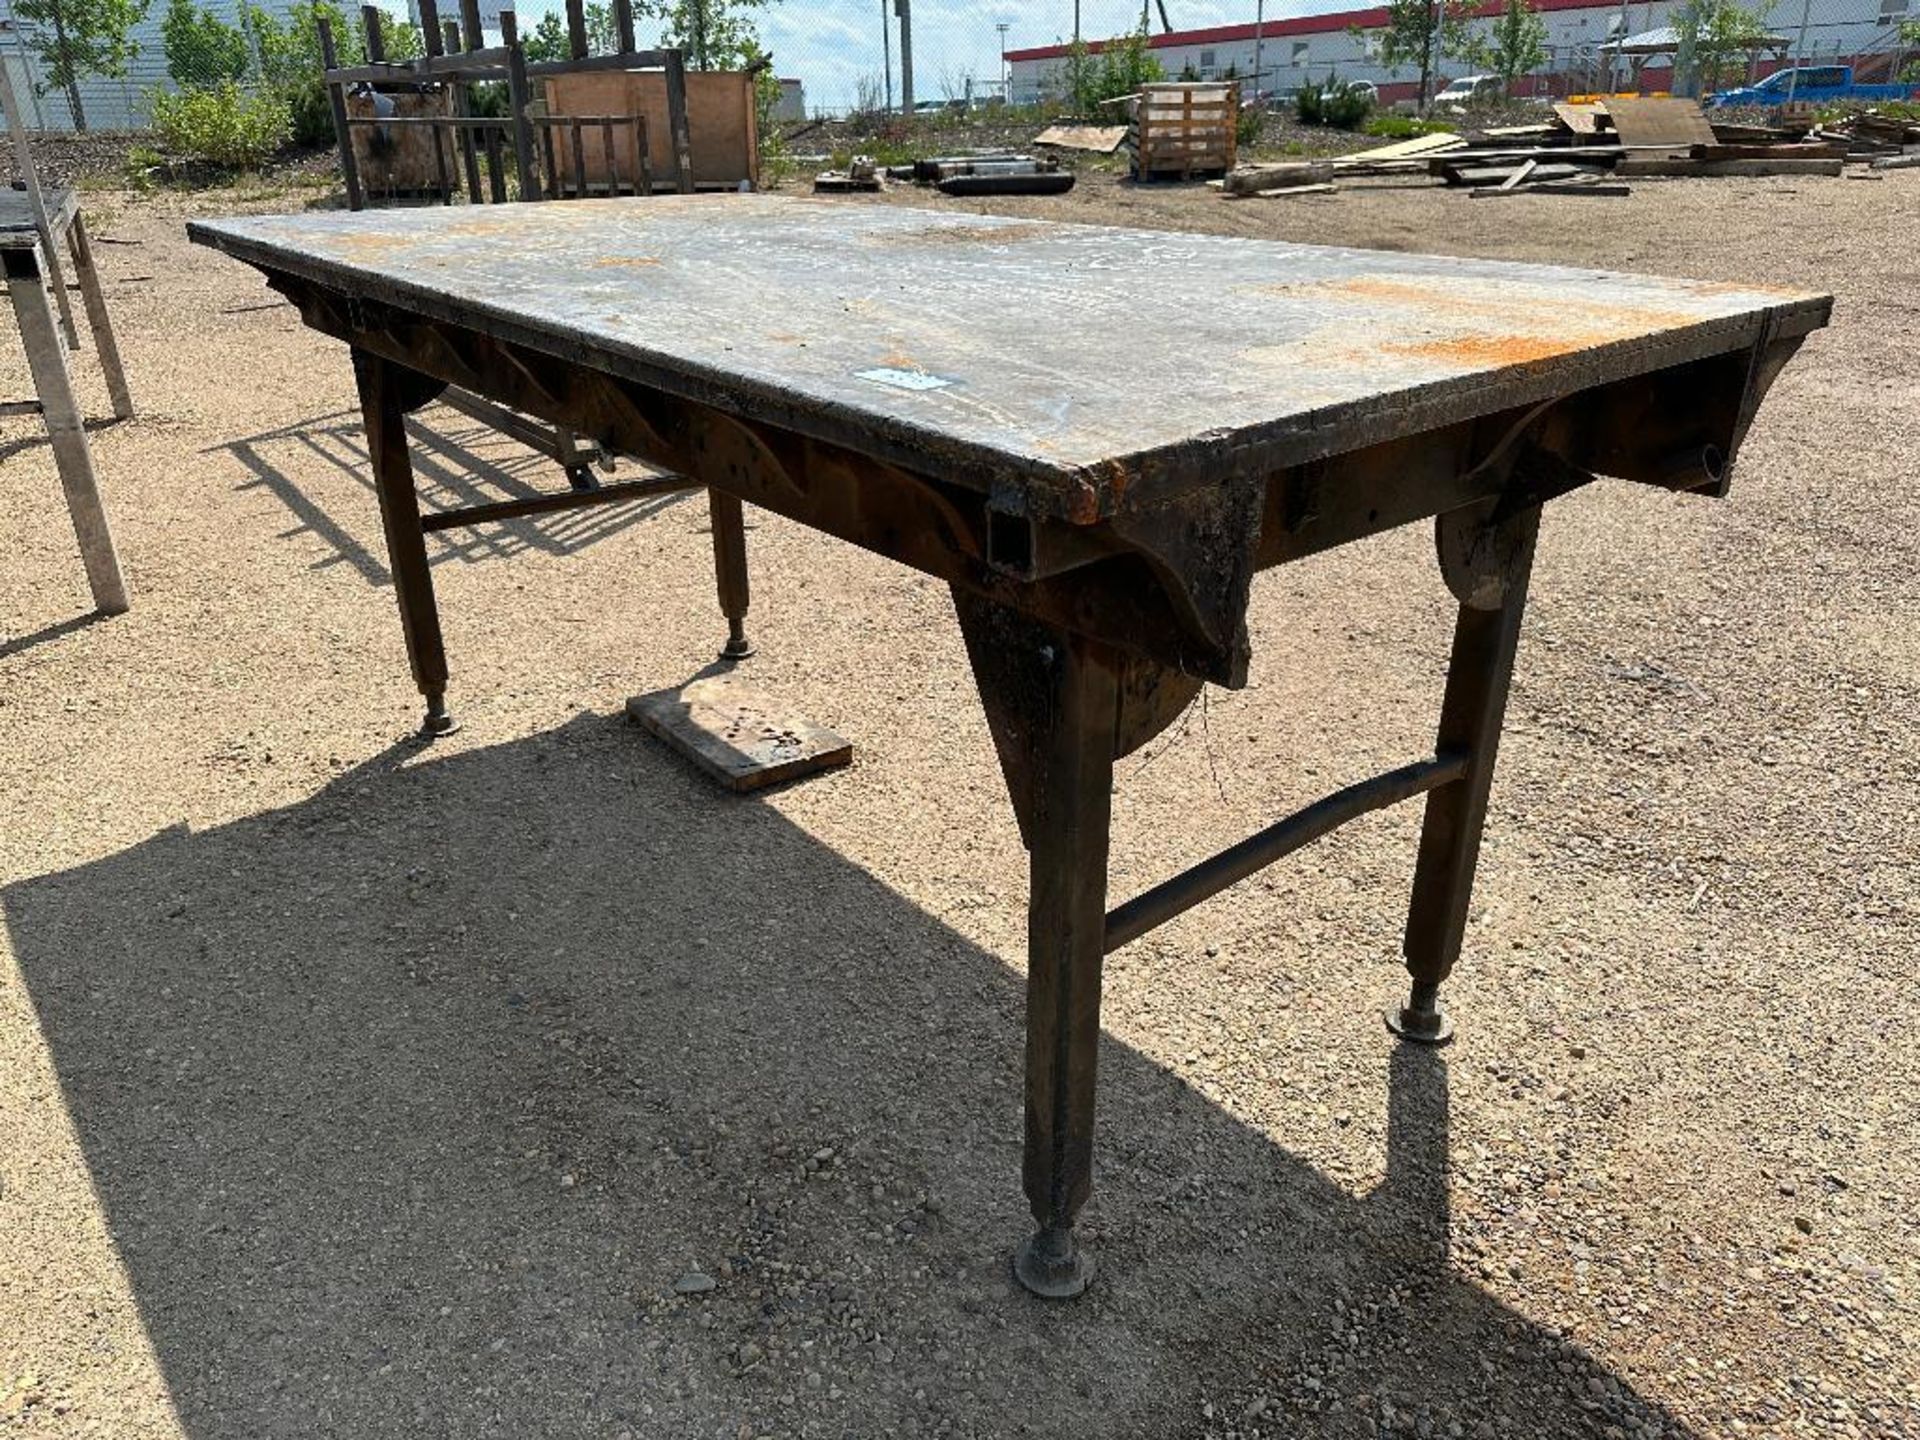 4’ X 8’ Steel Welding Table w/ 1-1/2” Top